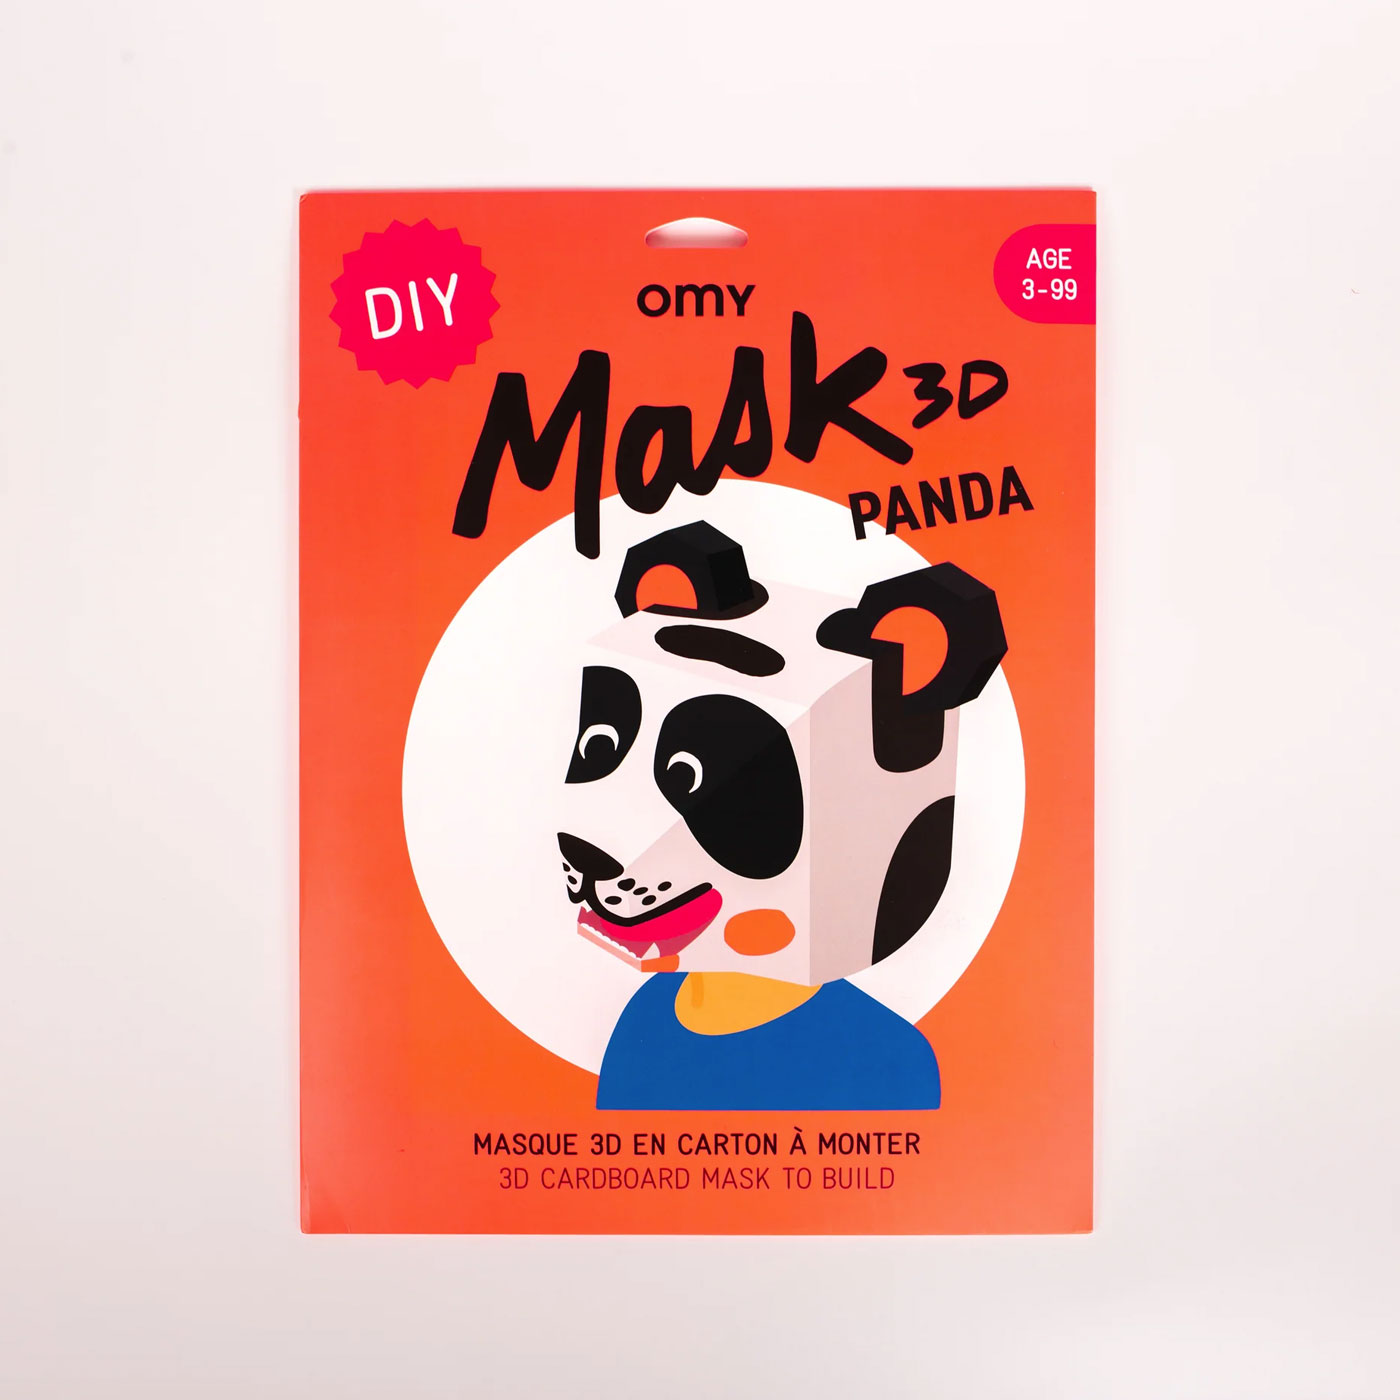  Omy 3D Mask Panda